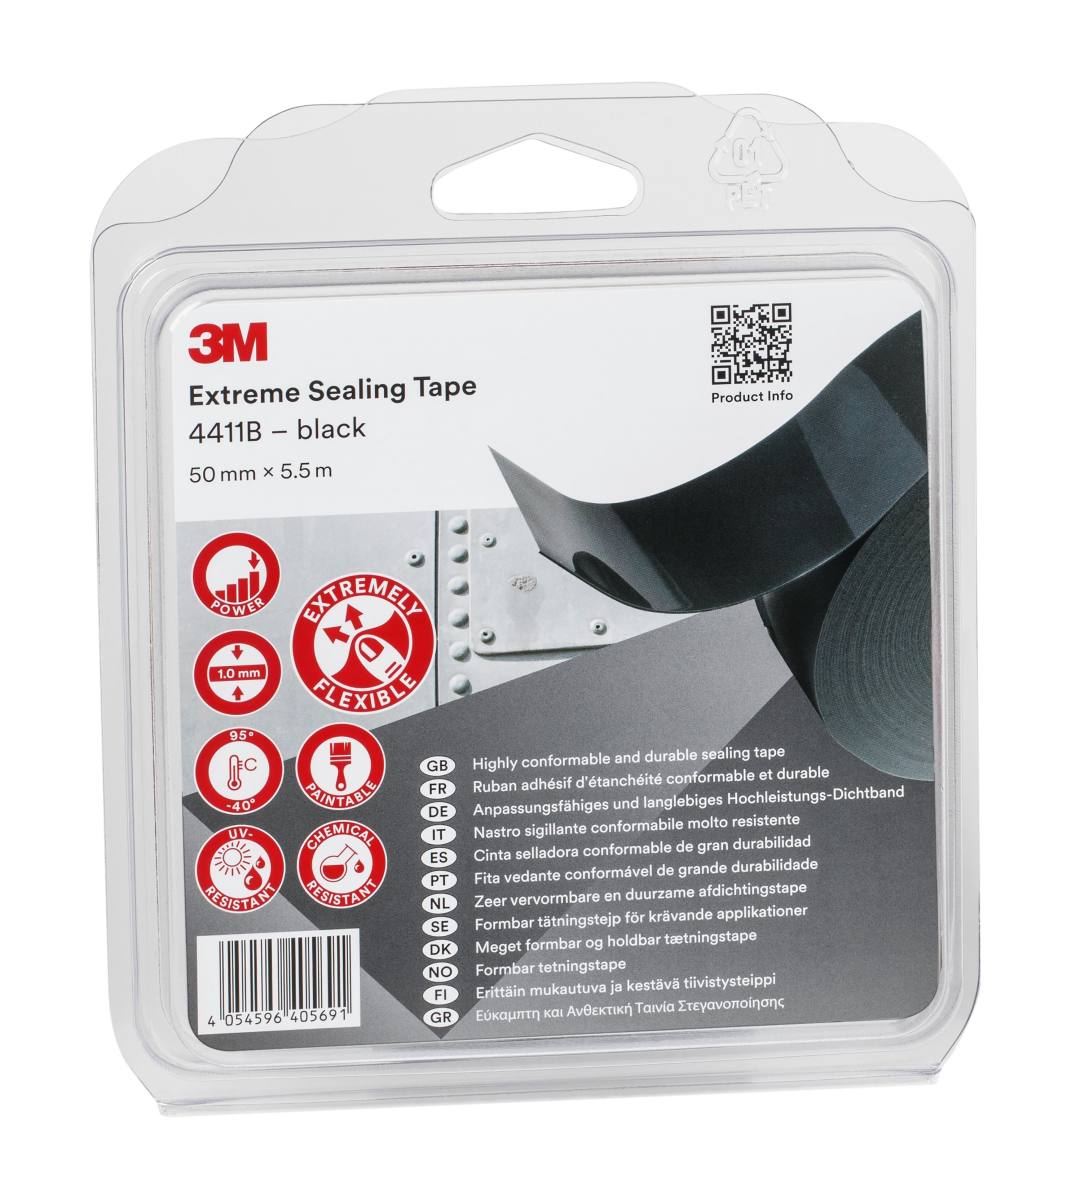 3M High-performance sealing tape 4411B, 50 mm x 5.5 m, 1 mm, black, blister pack